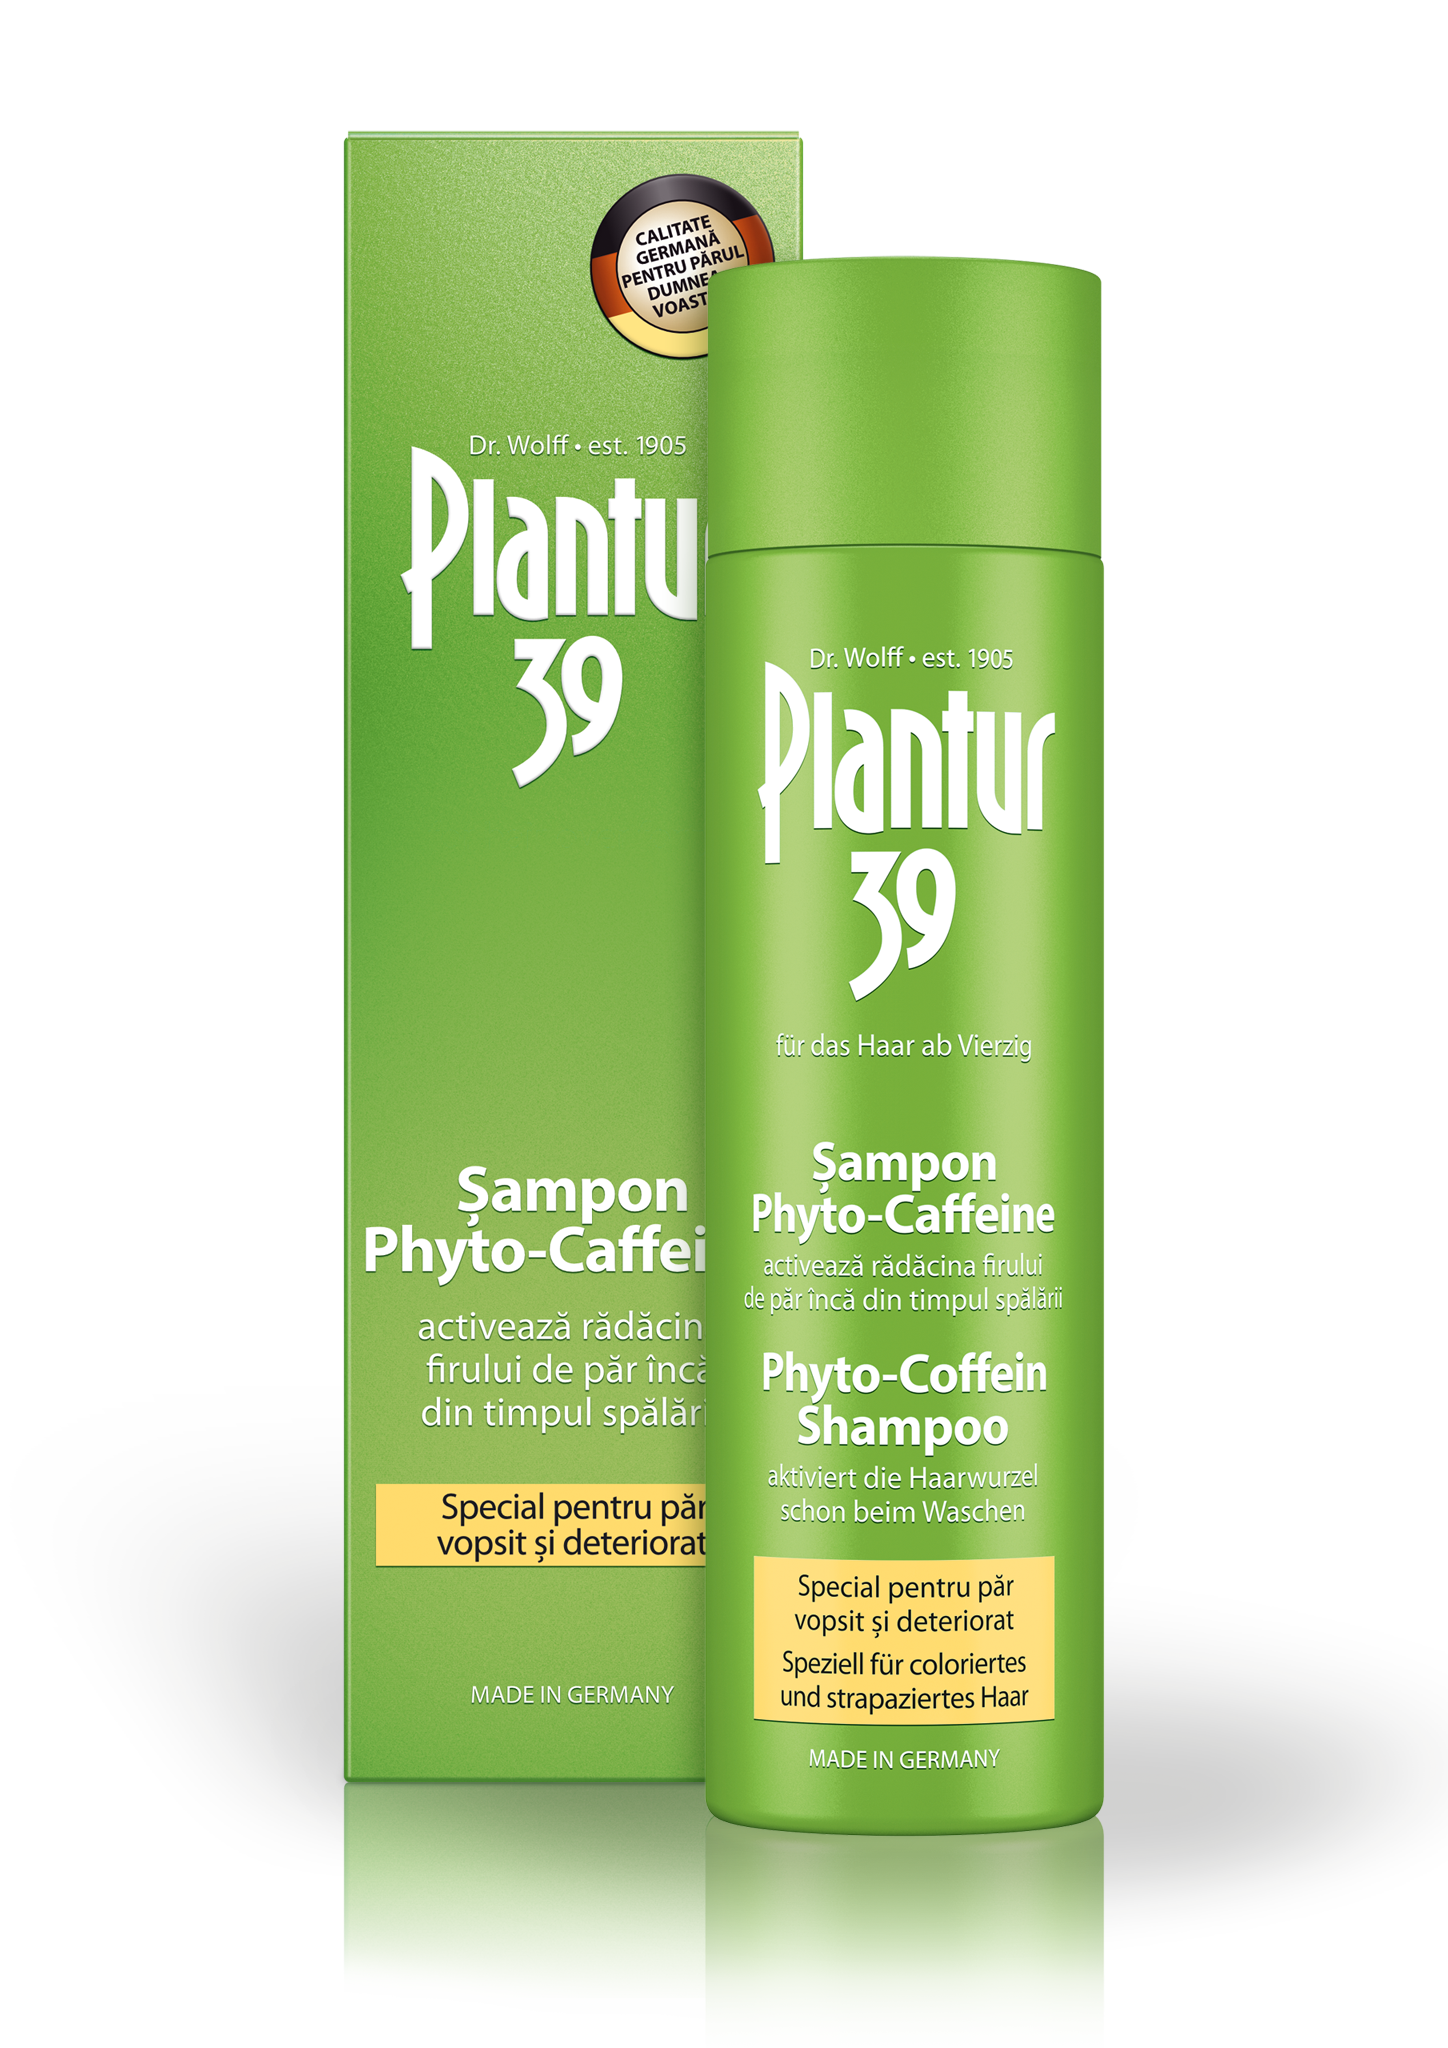 Sampon - Plantur 39 Șampon Phyto-Caffeine pentru păr vopsit și deteriorat, 250ml, sinapis.ro